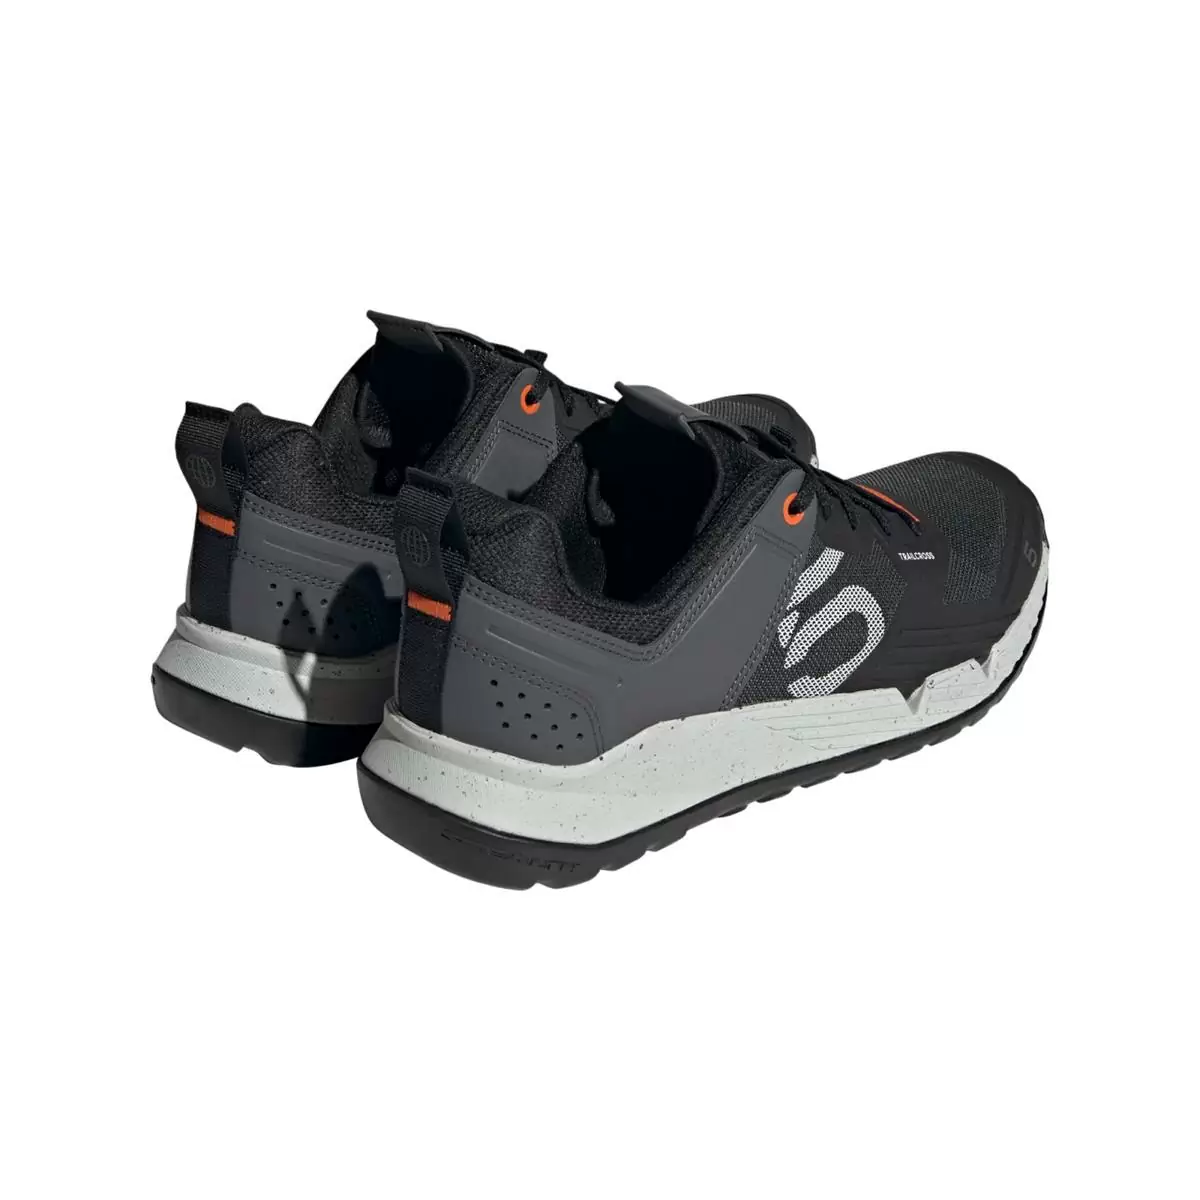 5.10 Trailcross XT Flat MTB Shoes Black/Grey Size 42.5 #5